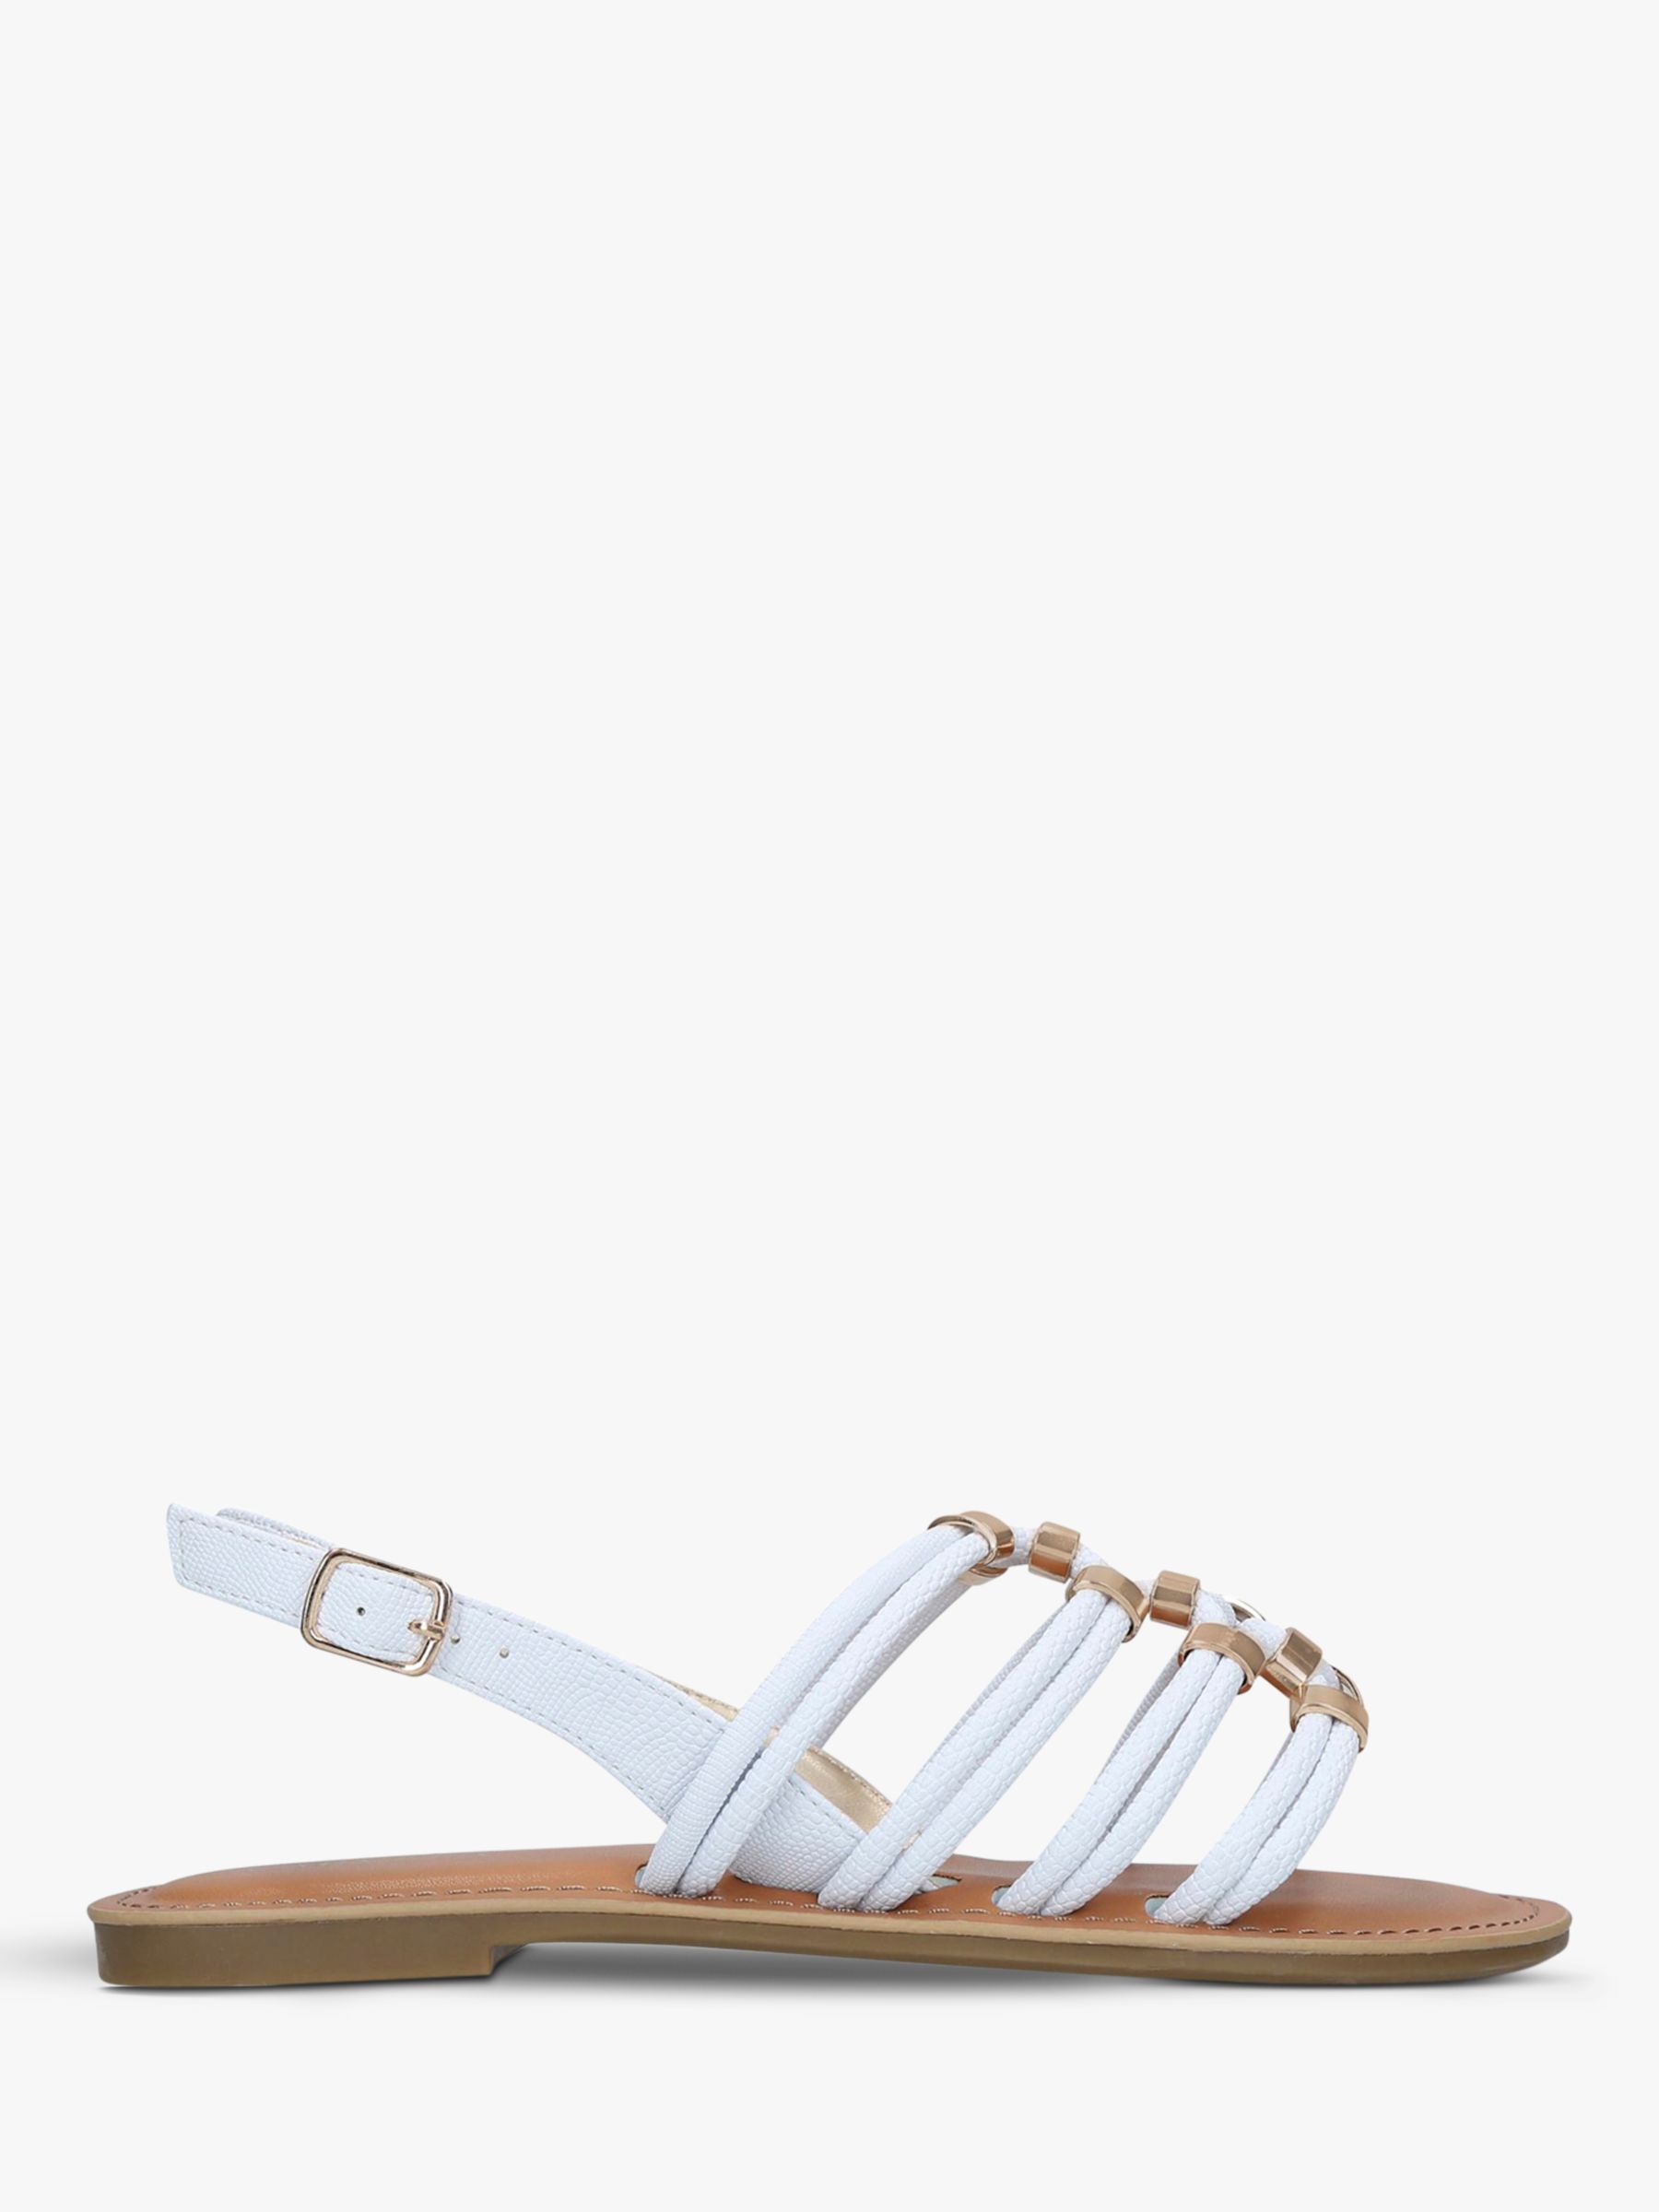 Carvela Birkby Strappy Sandals, White